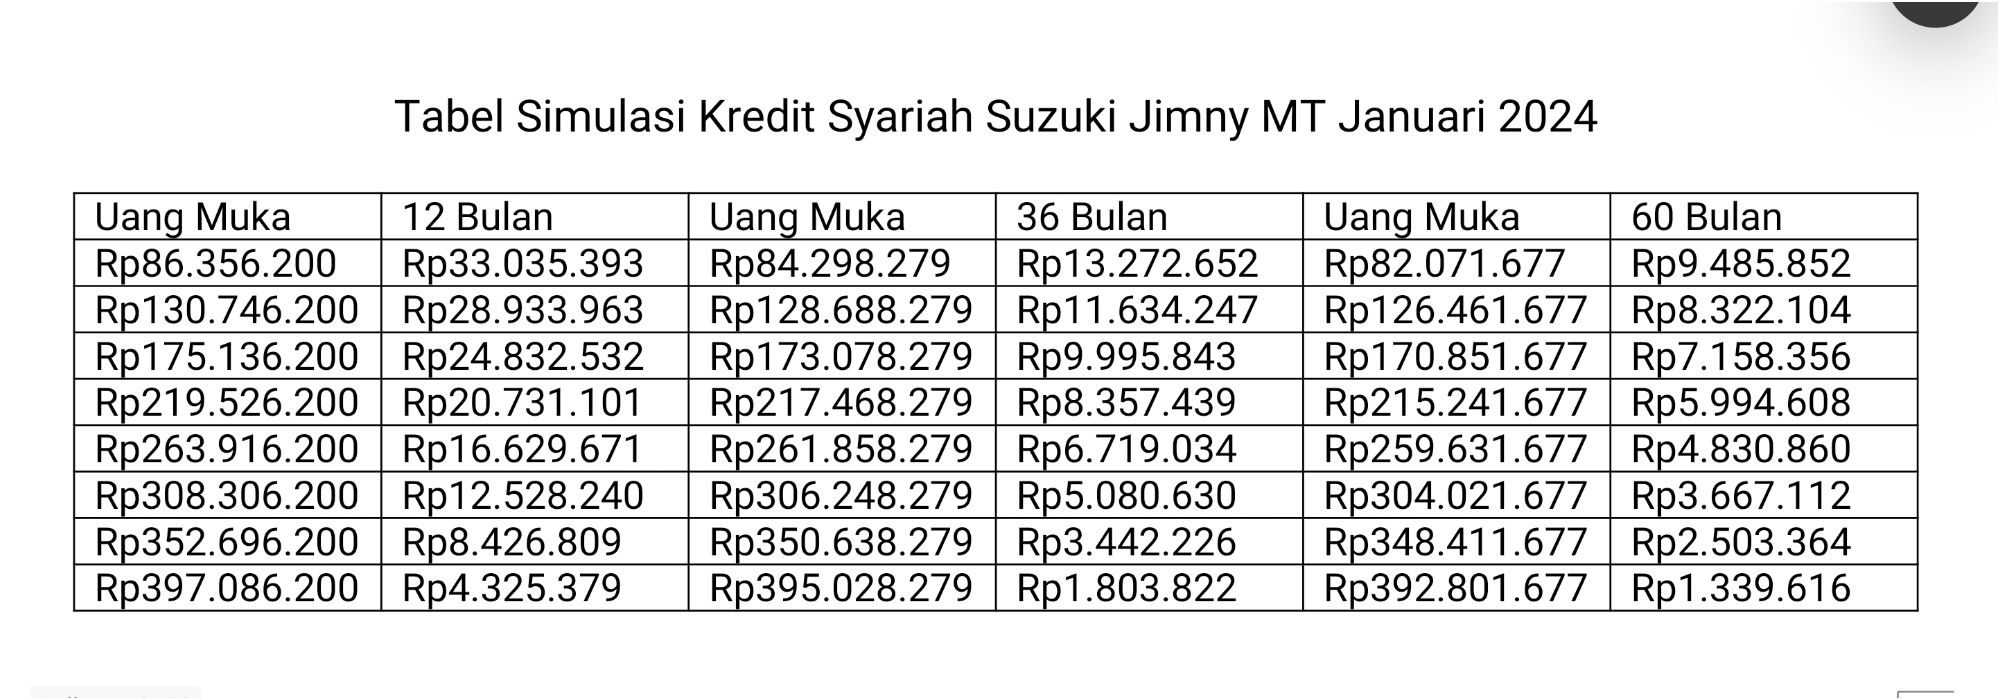 Tabel Simulasi Kredit Syariah Suzuki Jimny MT Januari 2024.